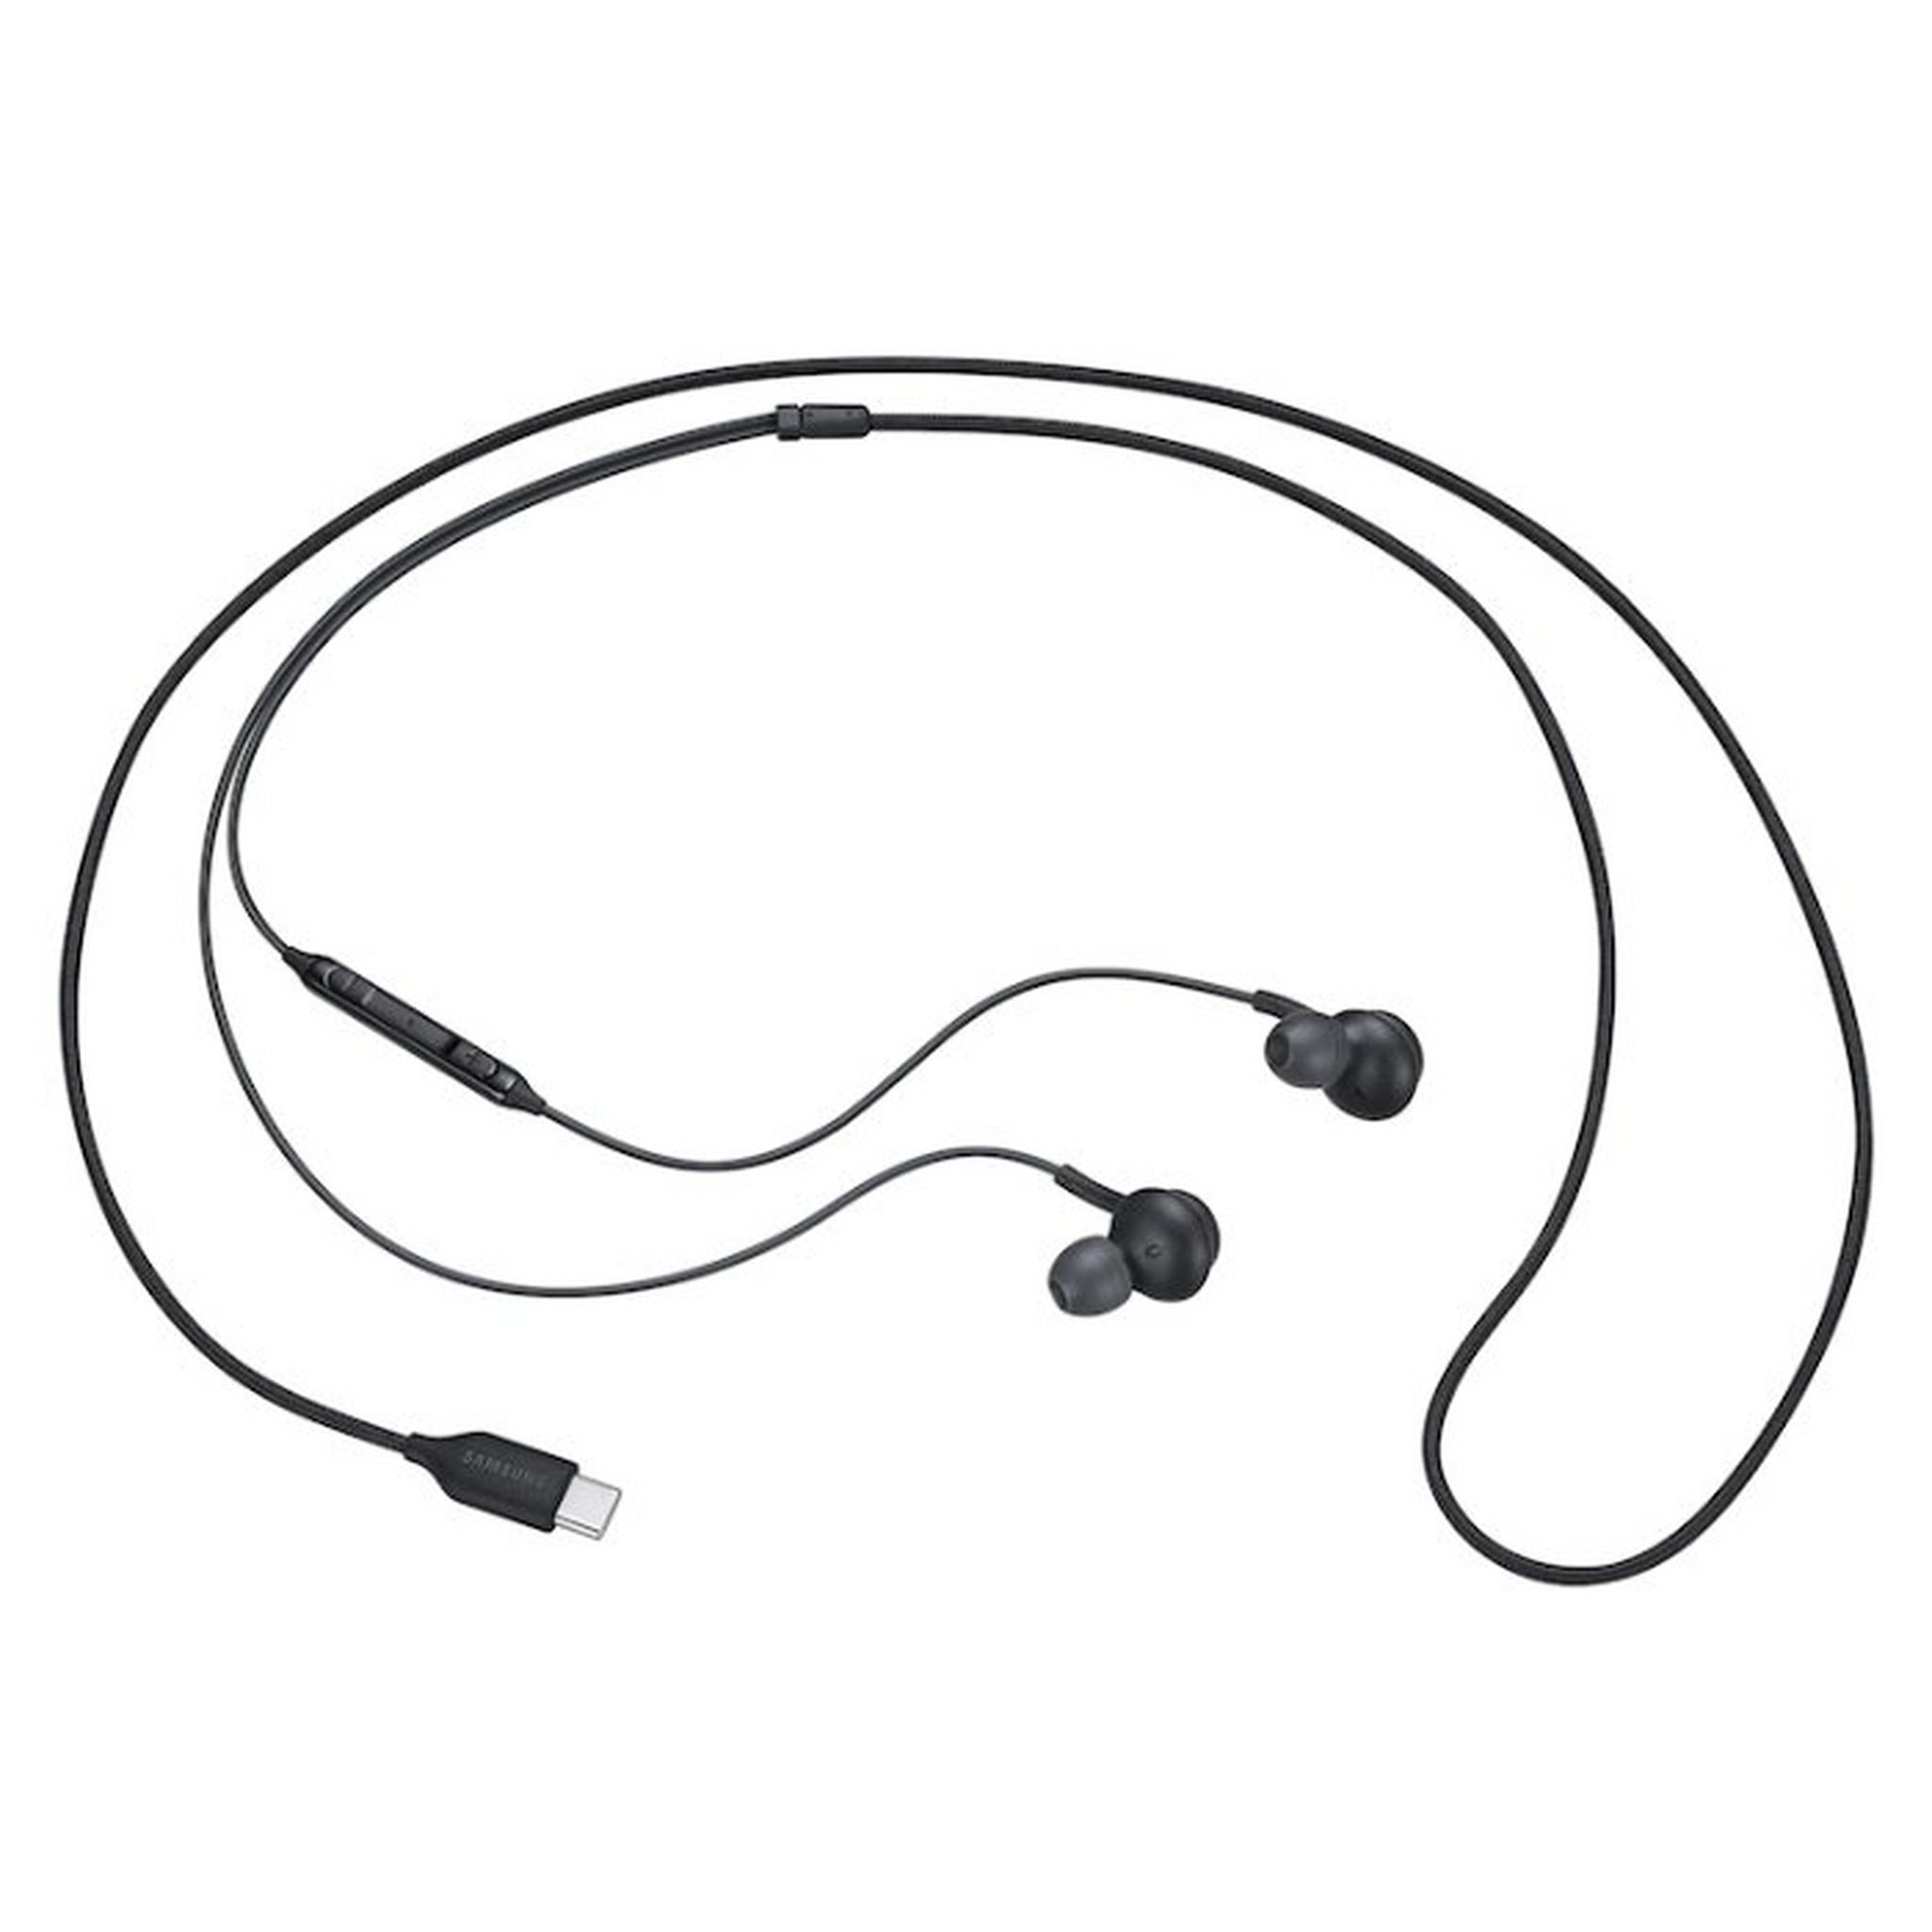 Samsung Type-C Headphones - Black